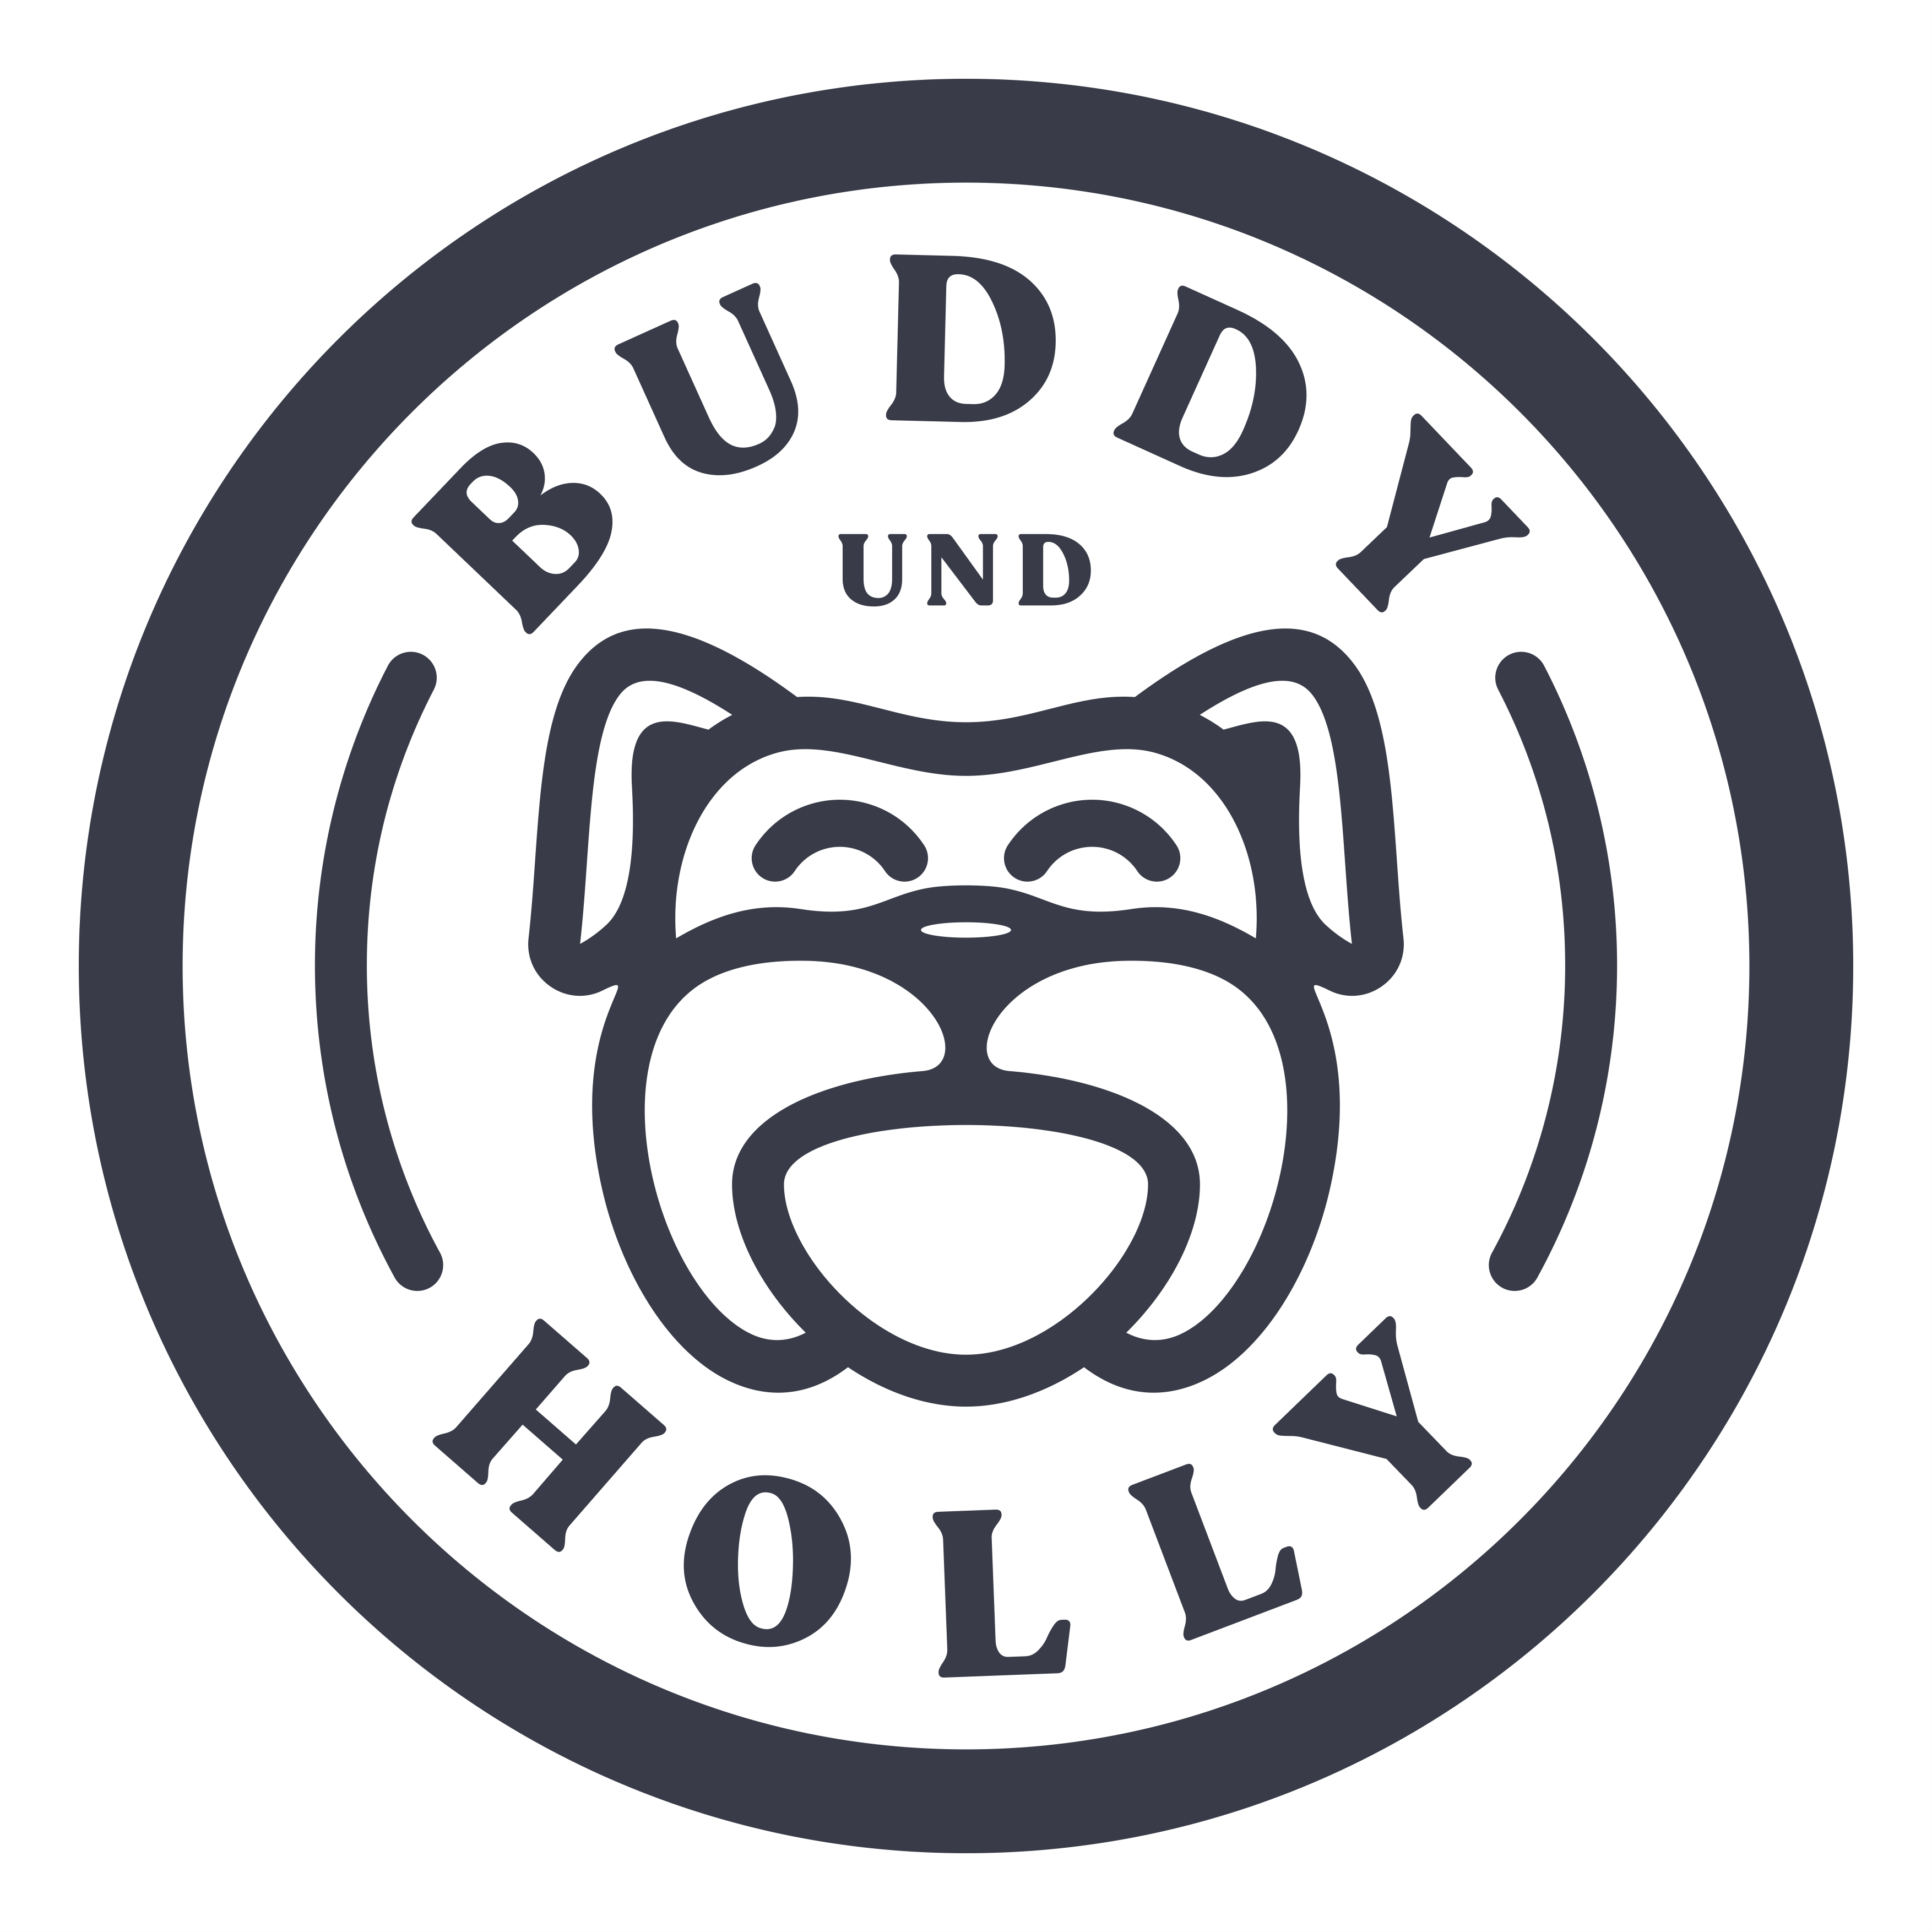 (c) Buddyundholly.de